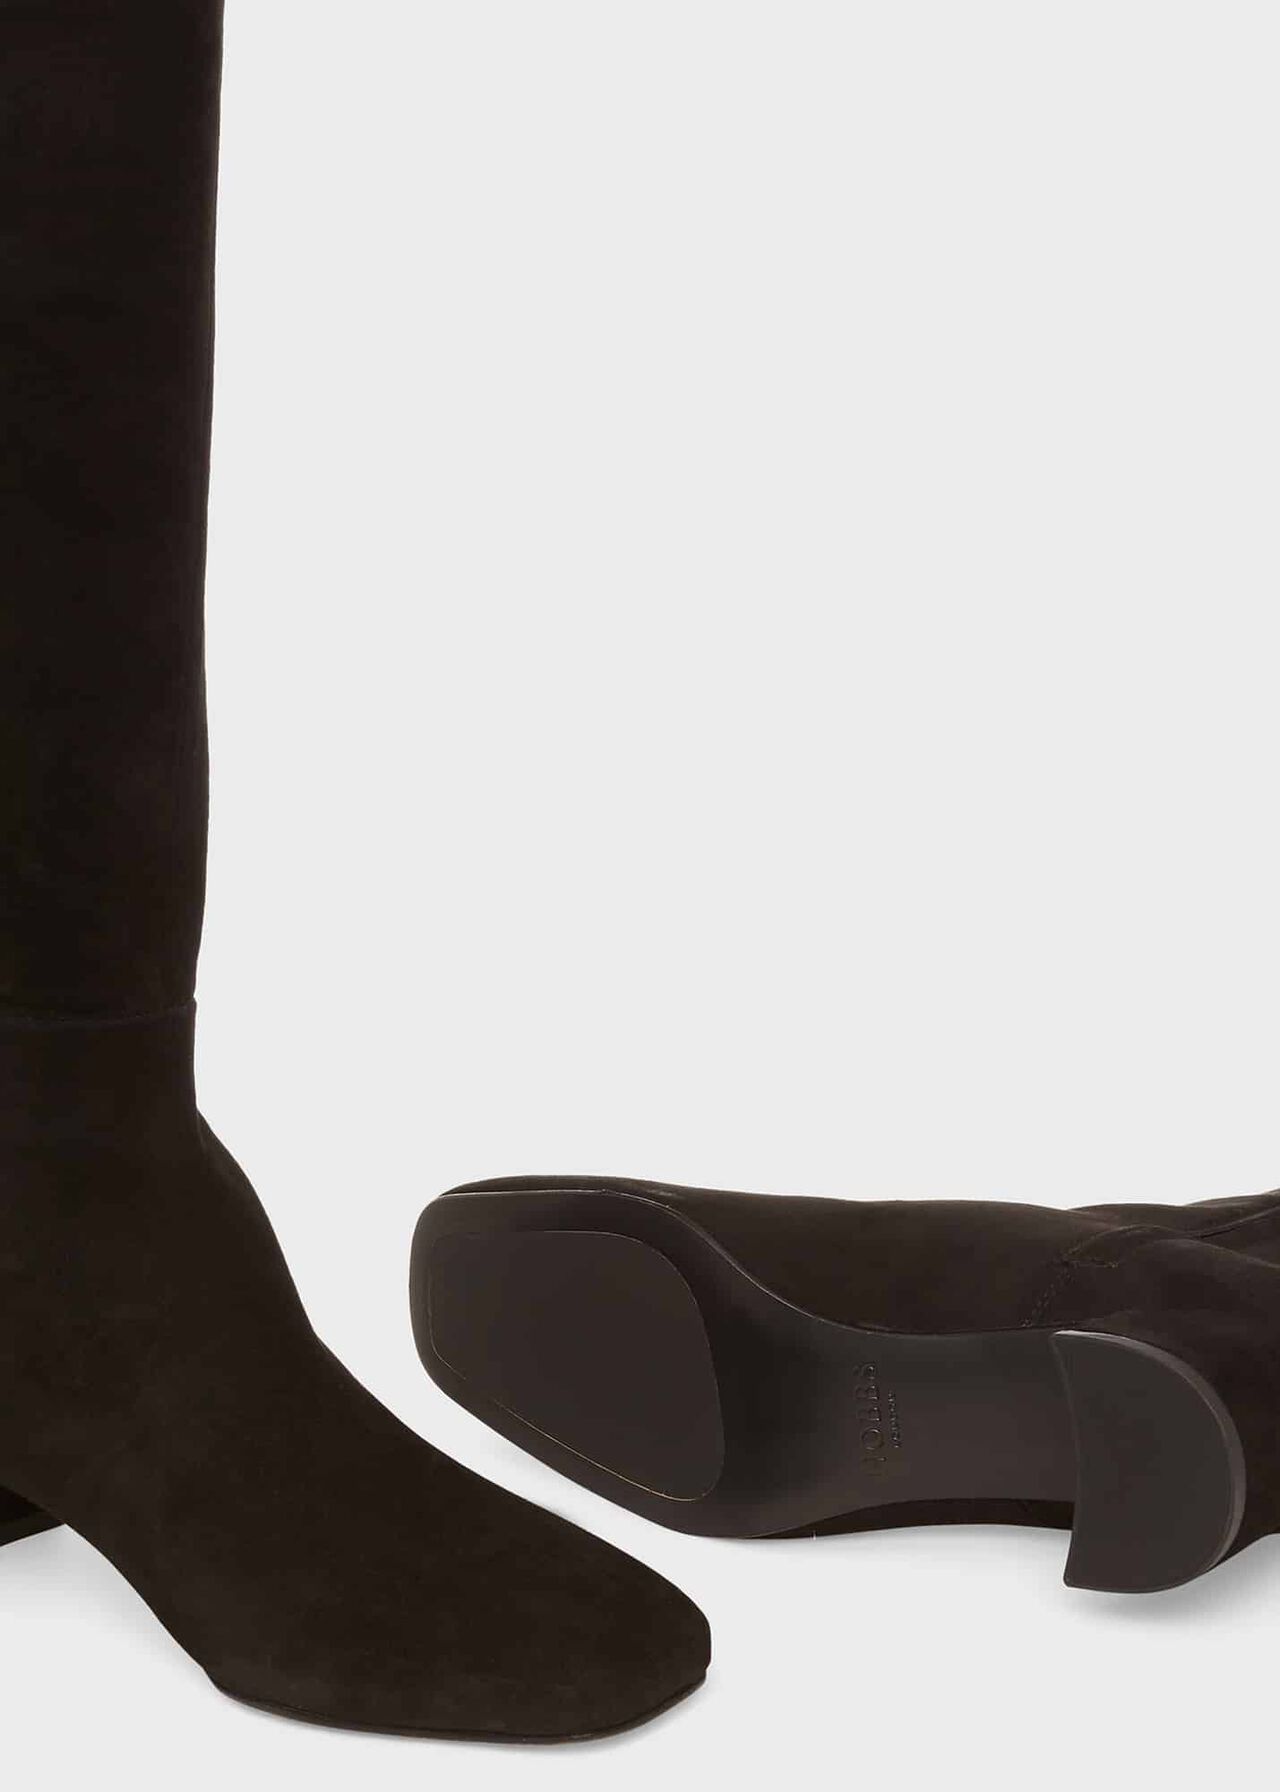 Khloe Leather Over Knee Boots, Black, hi-res